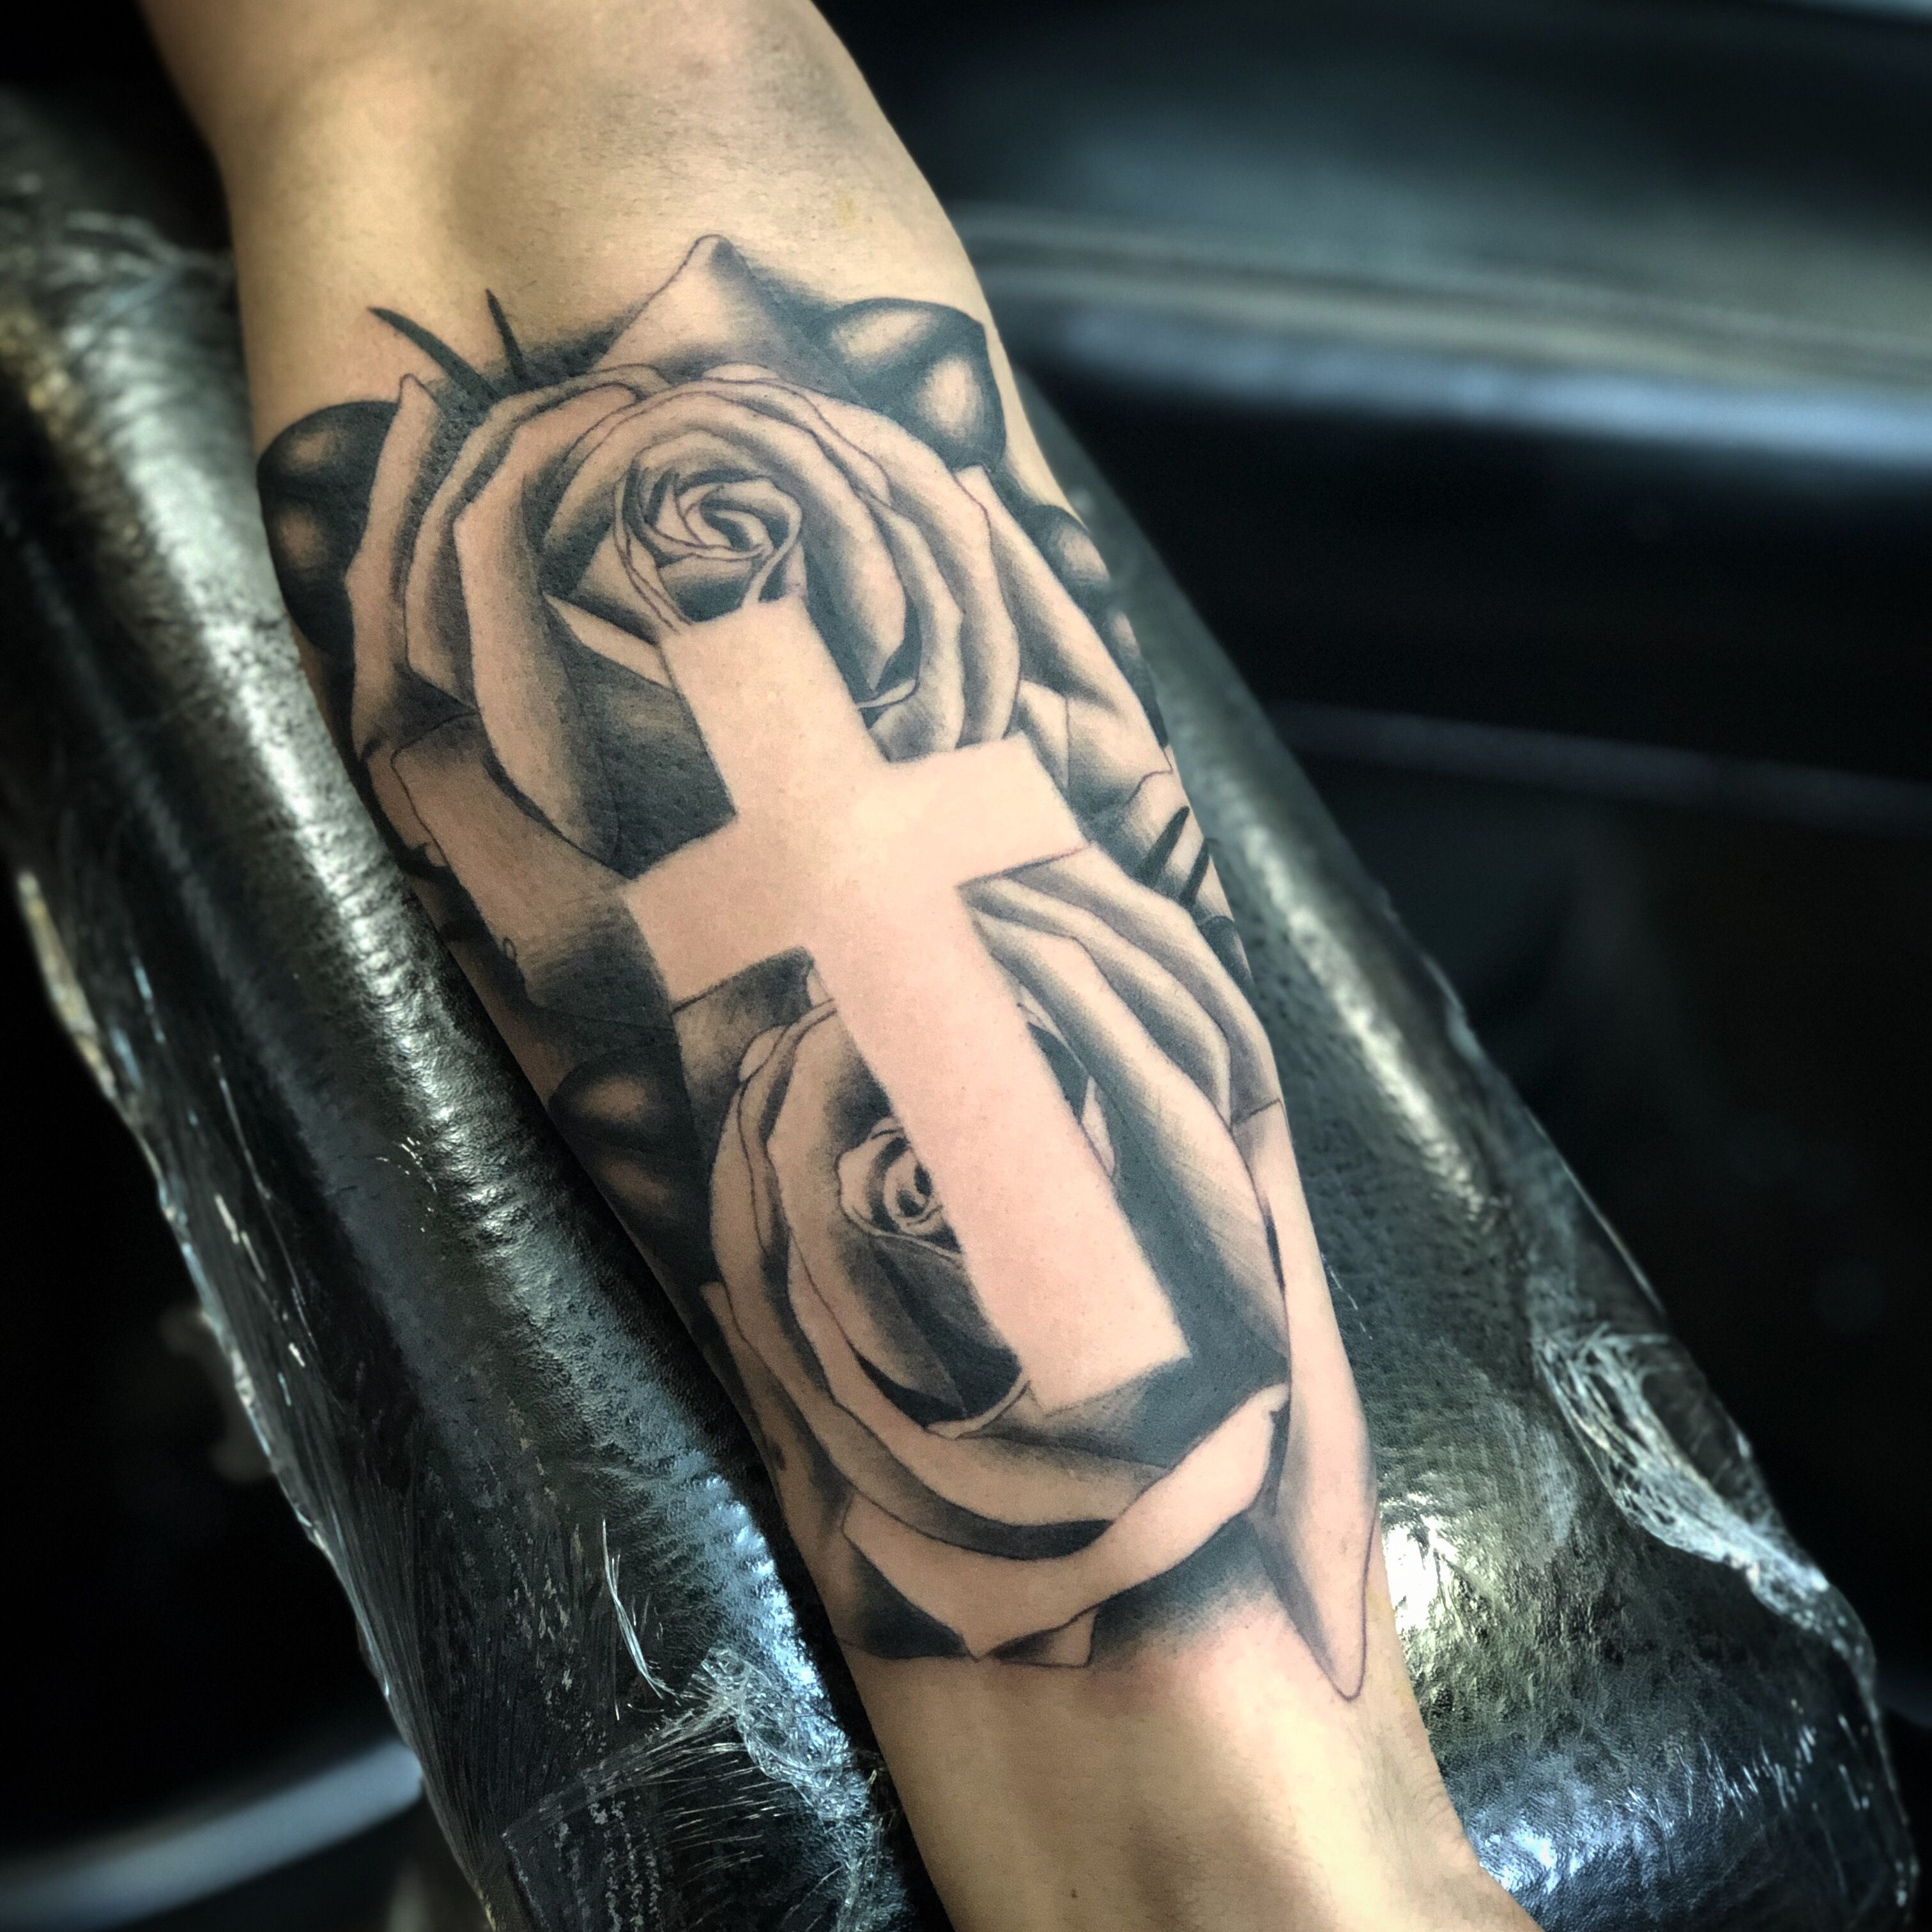 GArts Tattoo Navan  Roses  cross tattoo done by yamiltattoos  Facebook